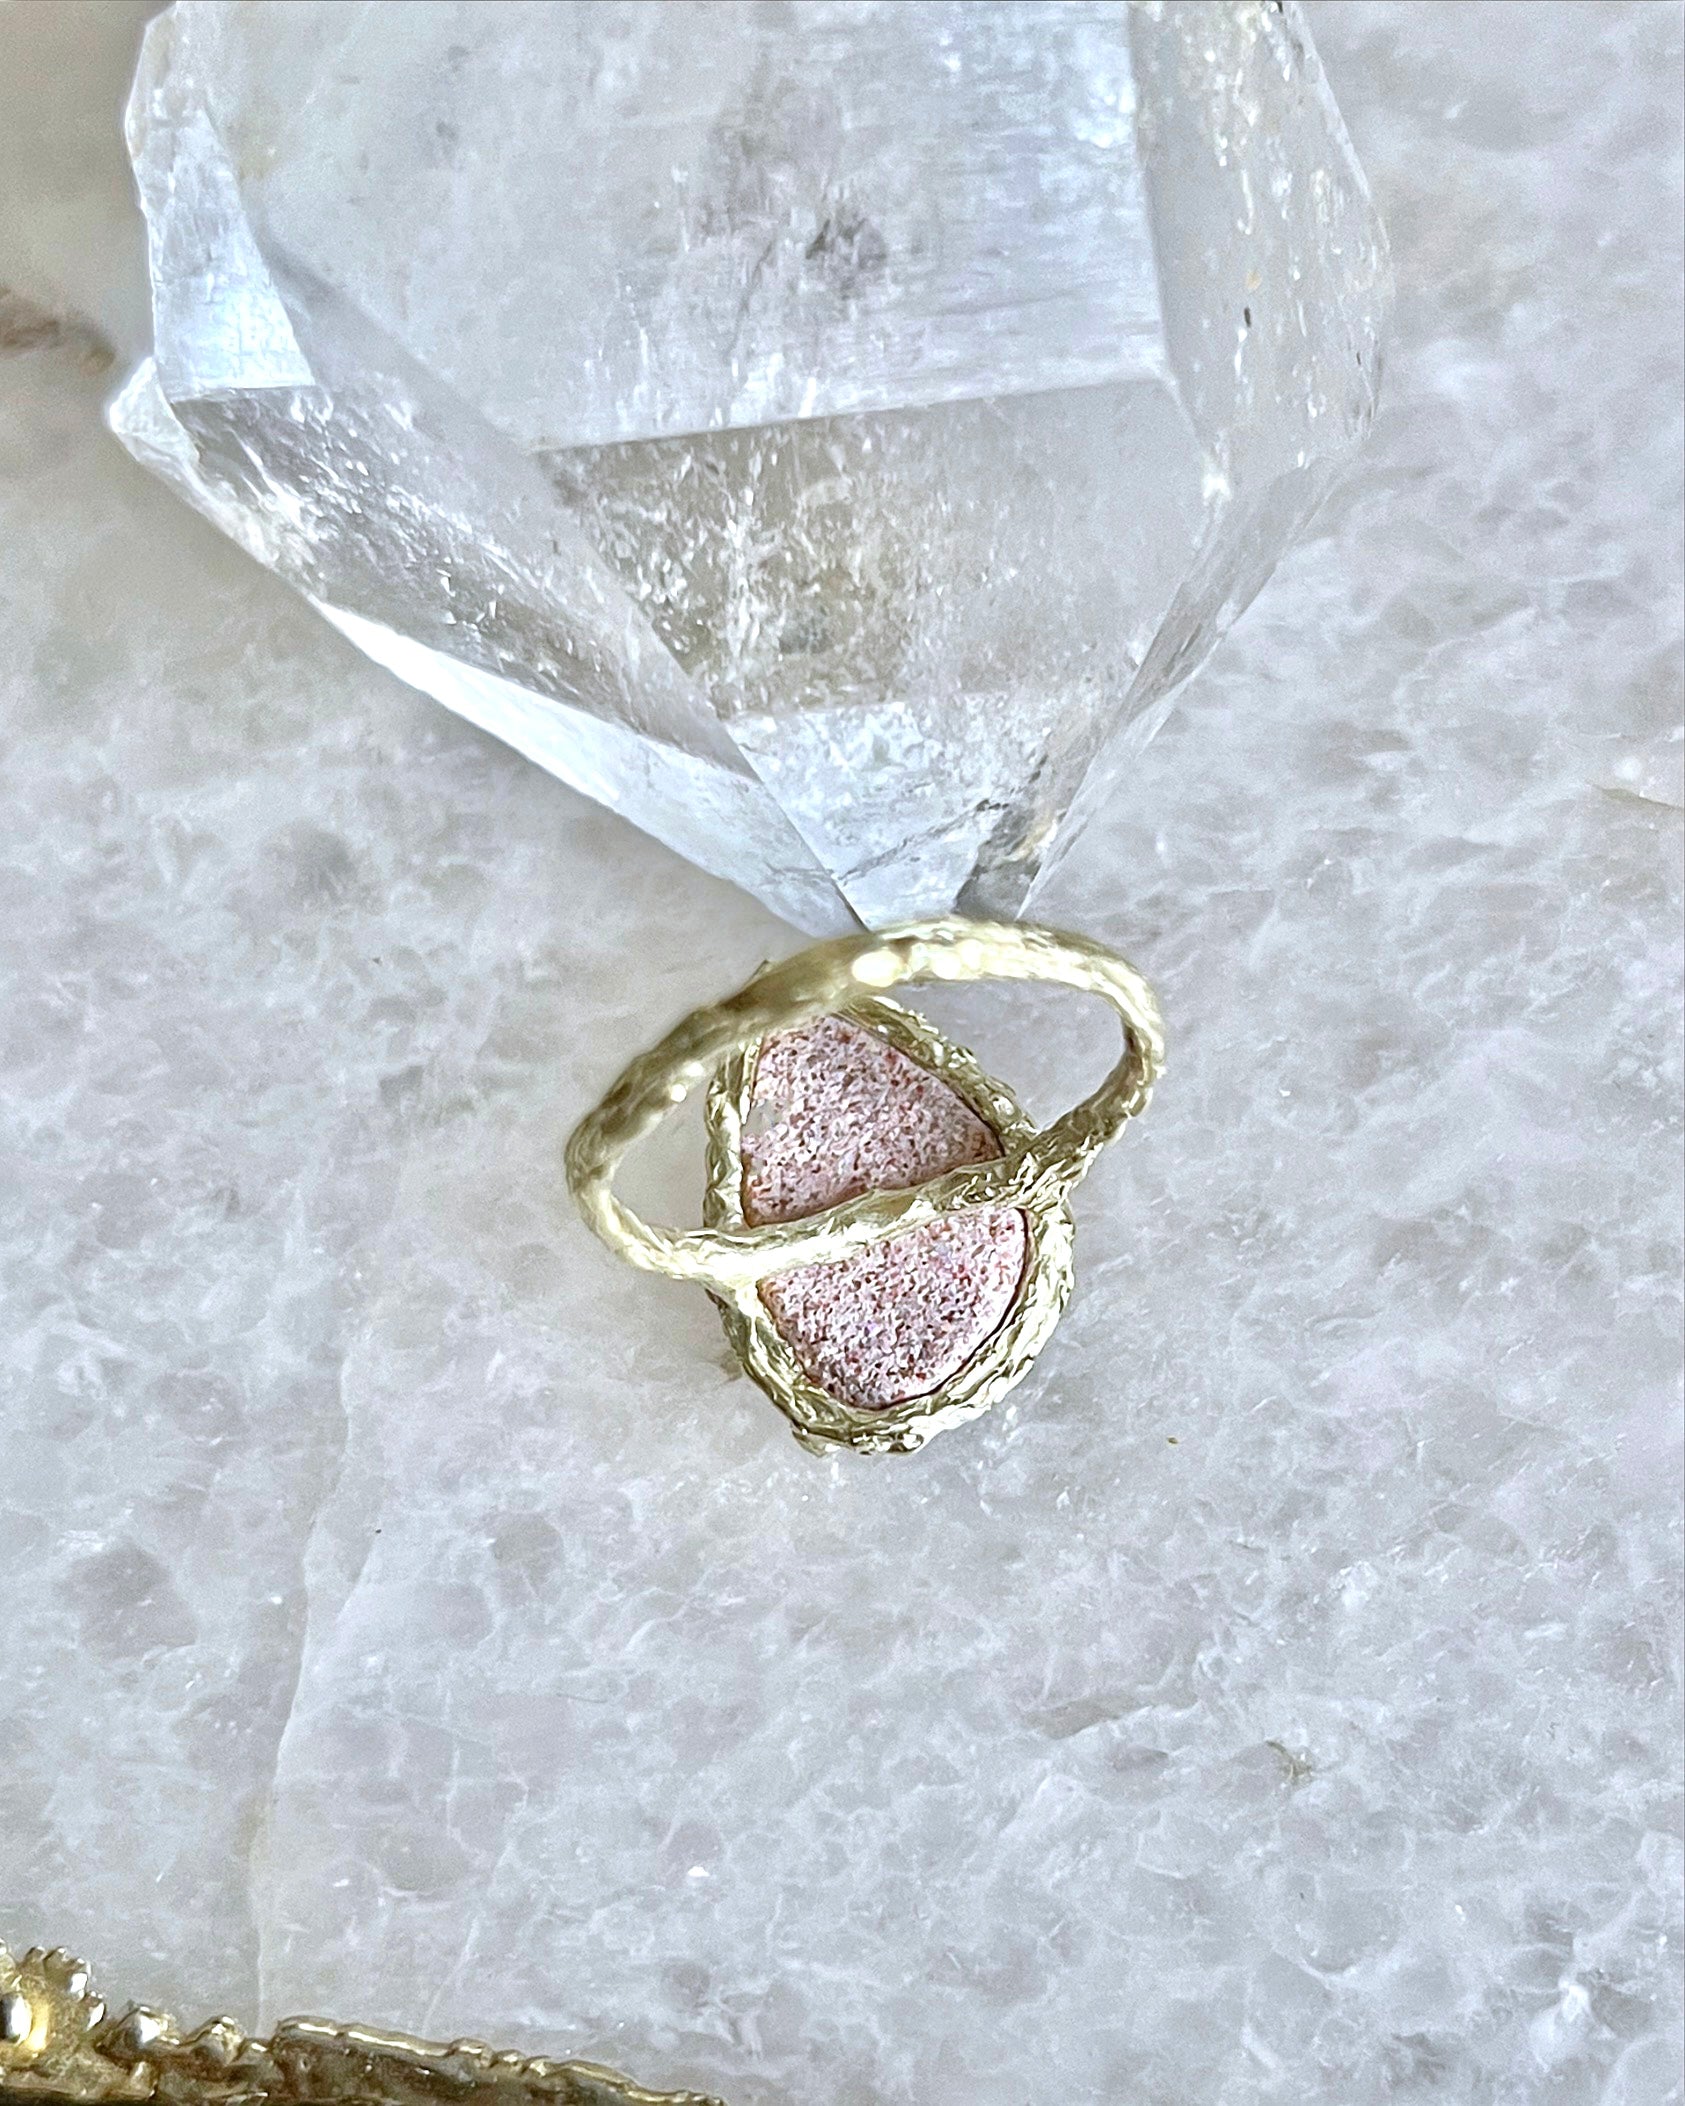 14k Gold ⋄ Ascension Ring ⋄ Australian Opal ⋄ size 7